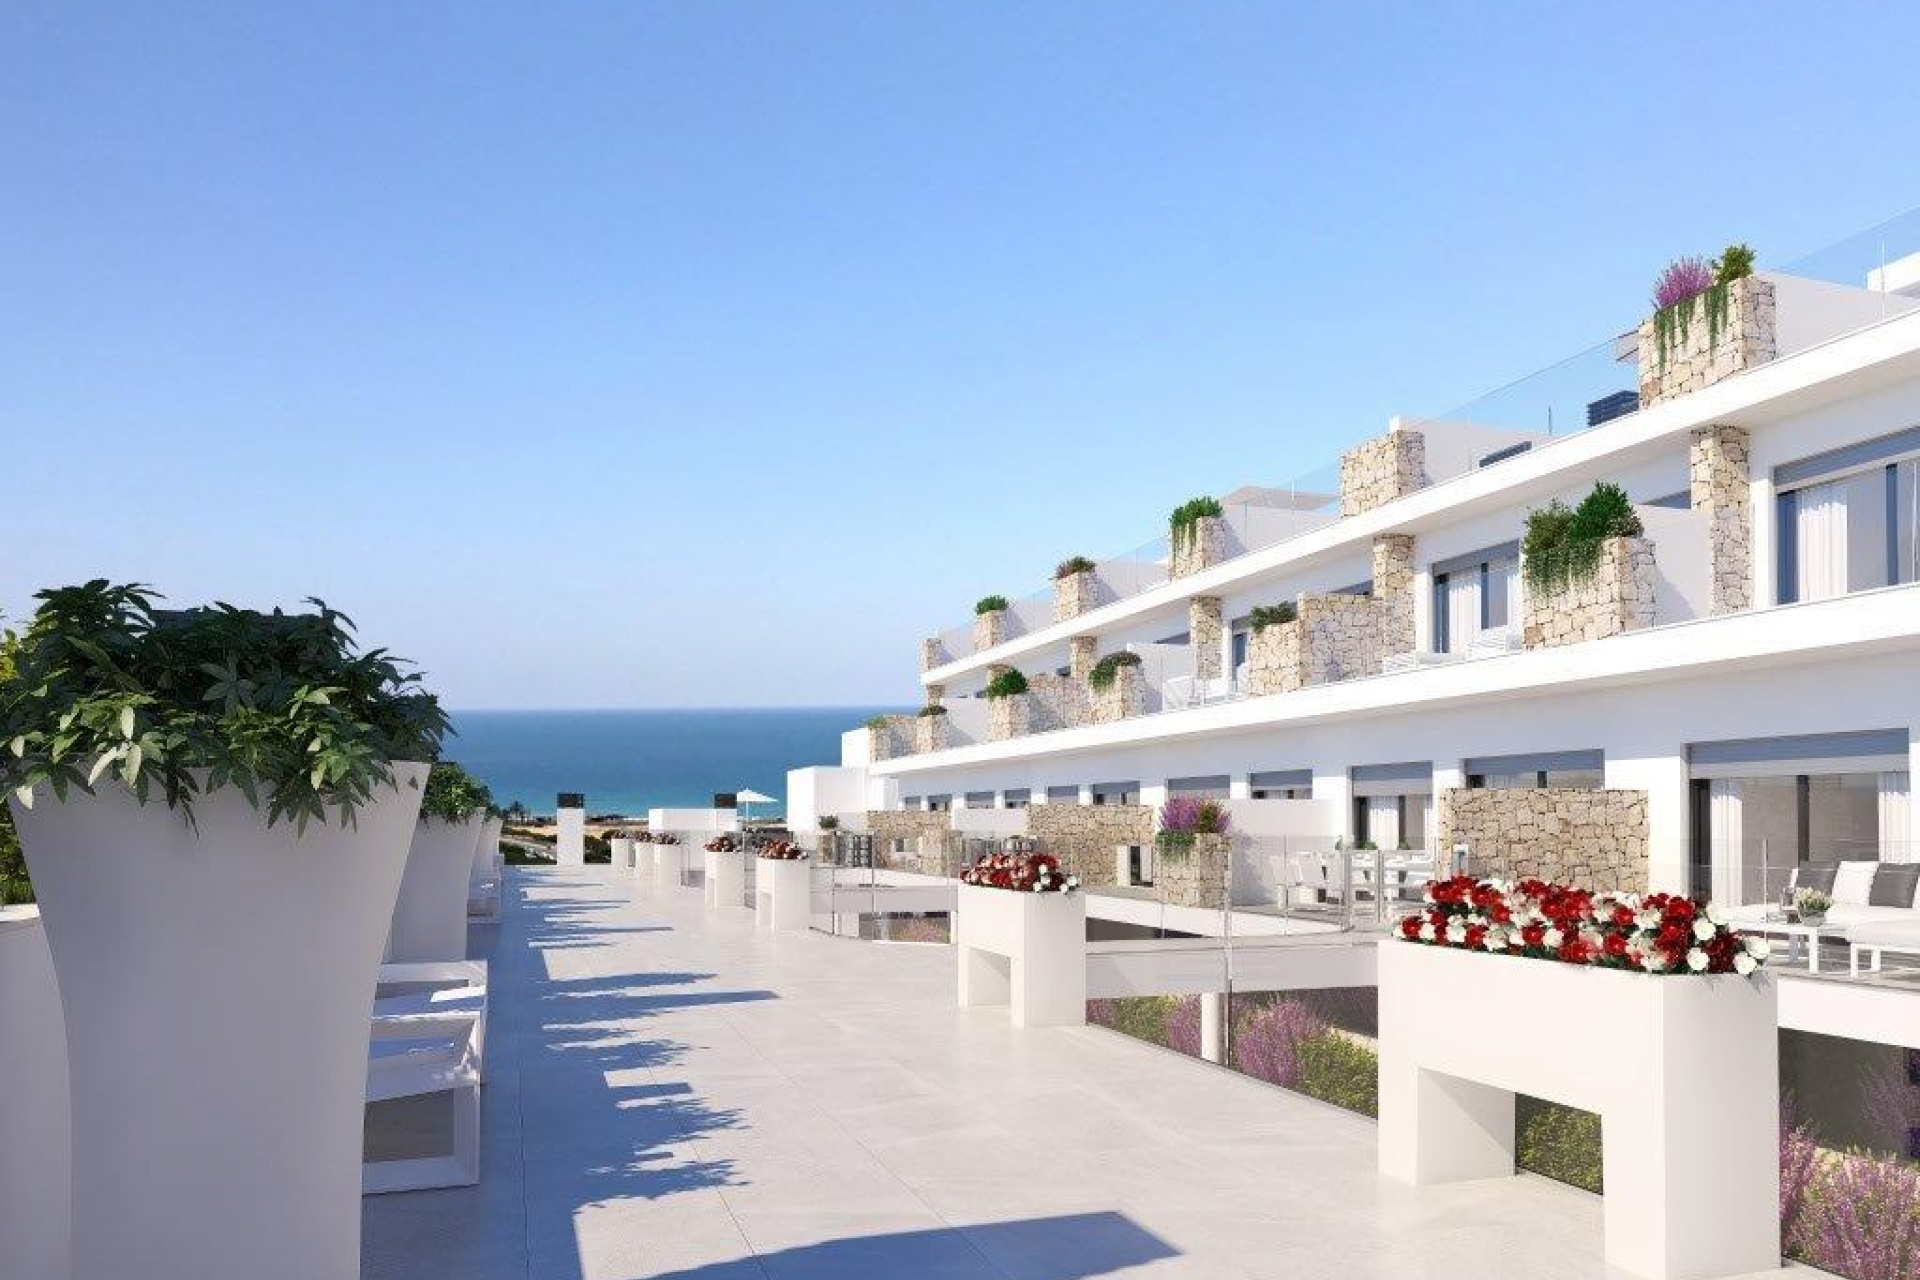 Uudet asunnot - Kerrostalo -
Santa Pola - Gran Playa